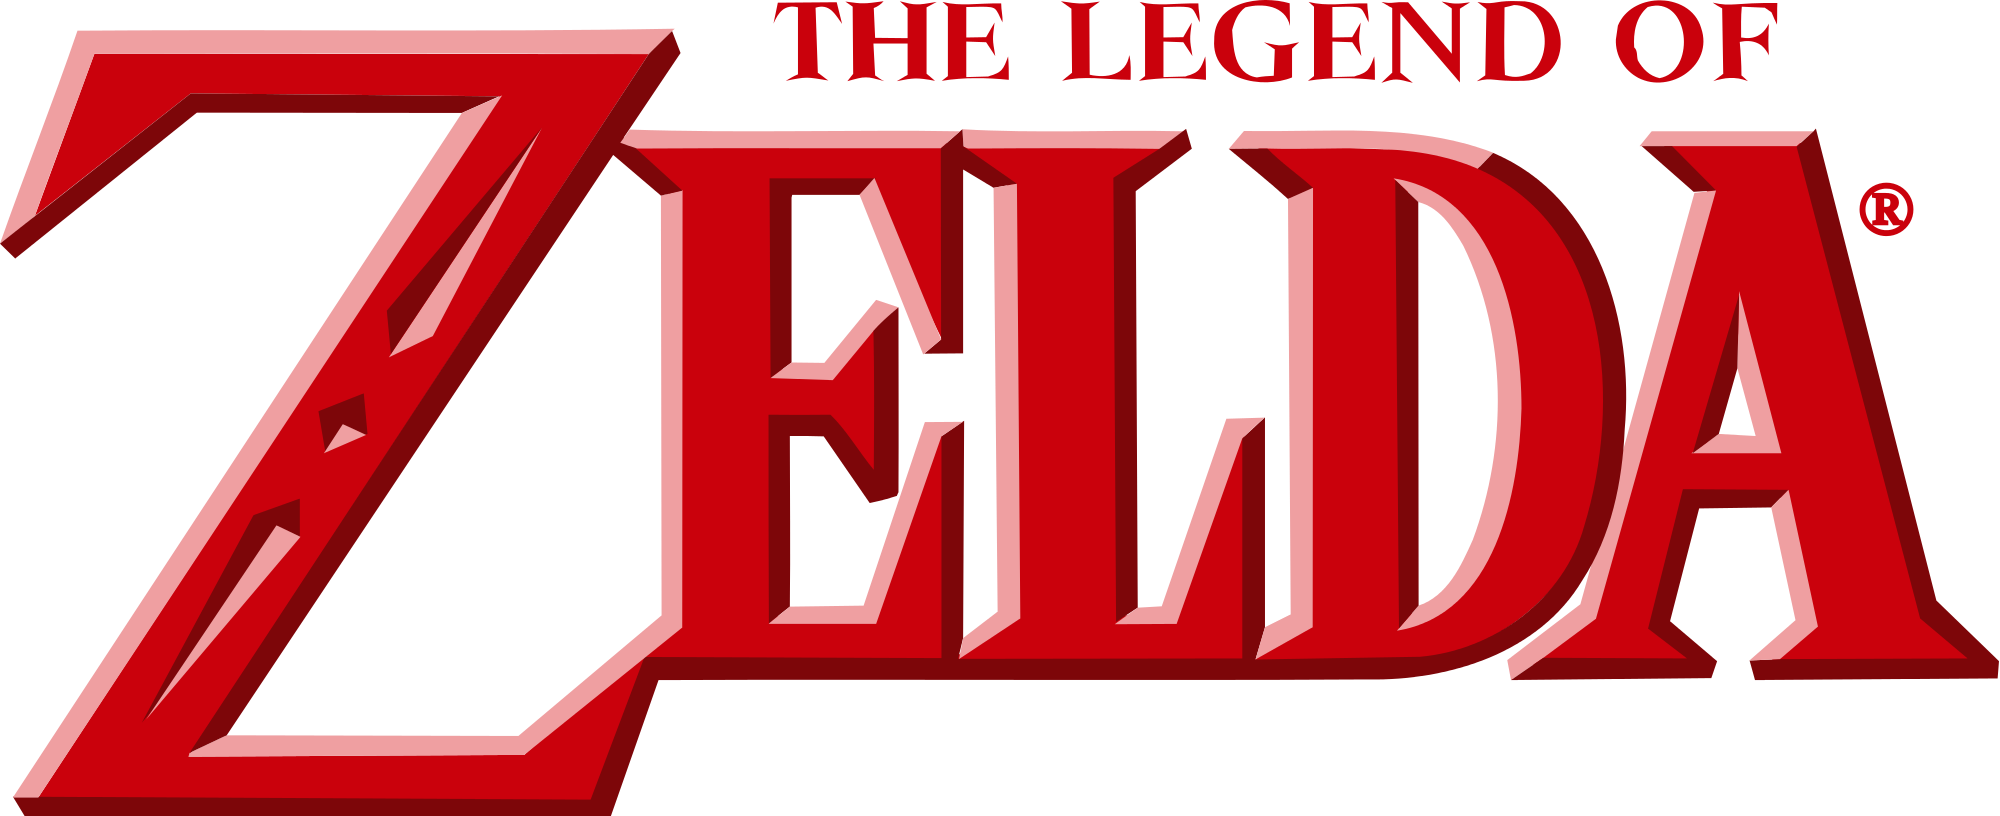 The Legend Of Zelda svg #19, Download drawings